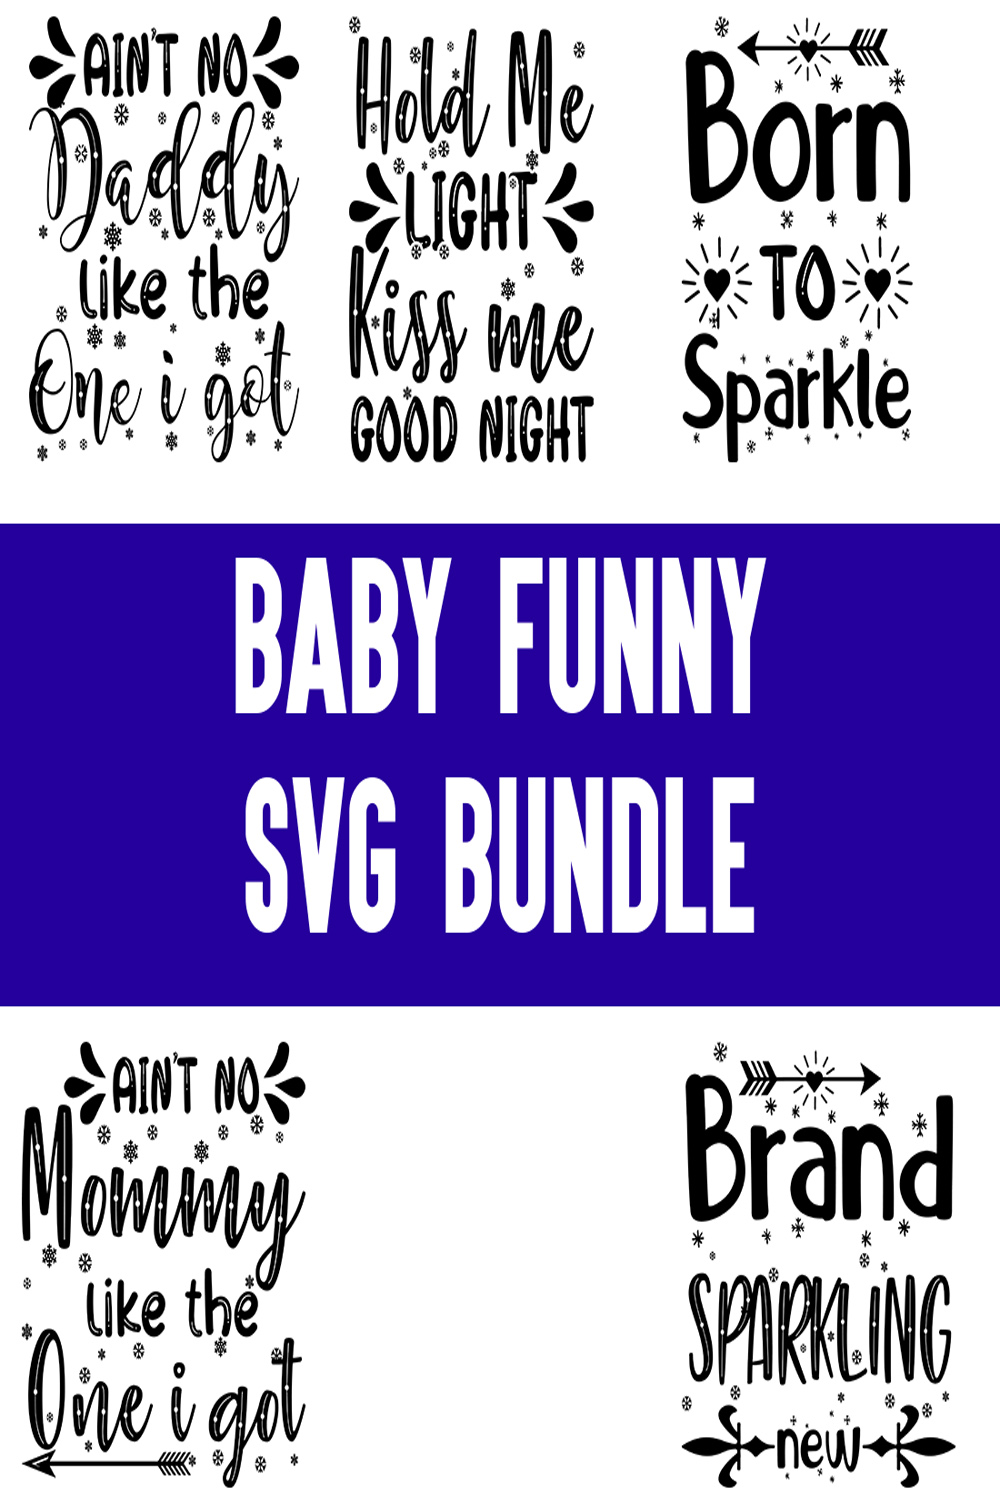 Baby Funny svg Bundle pinterest preview image.